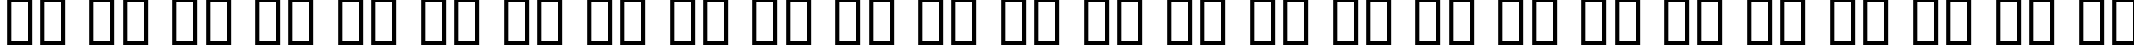 Пример написания английского алфавита шрифтом B Jadid Bold